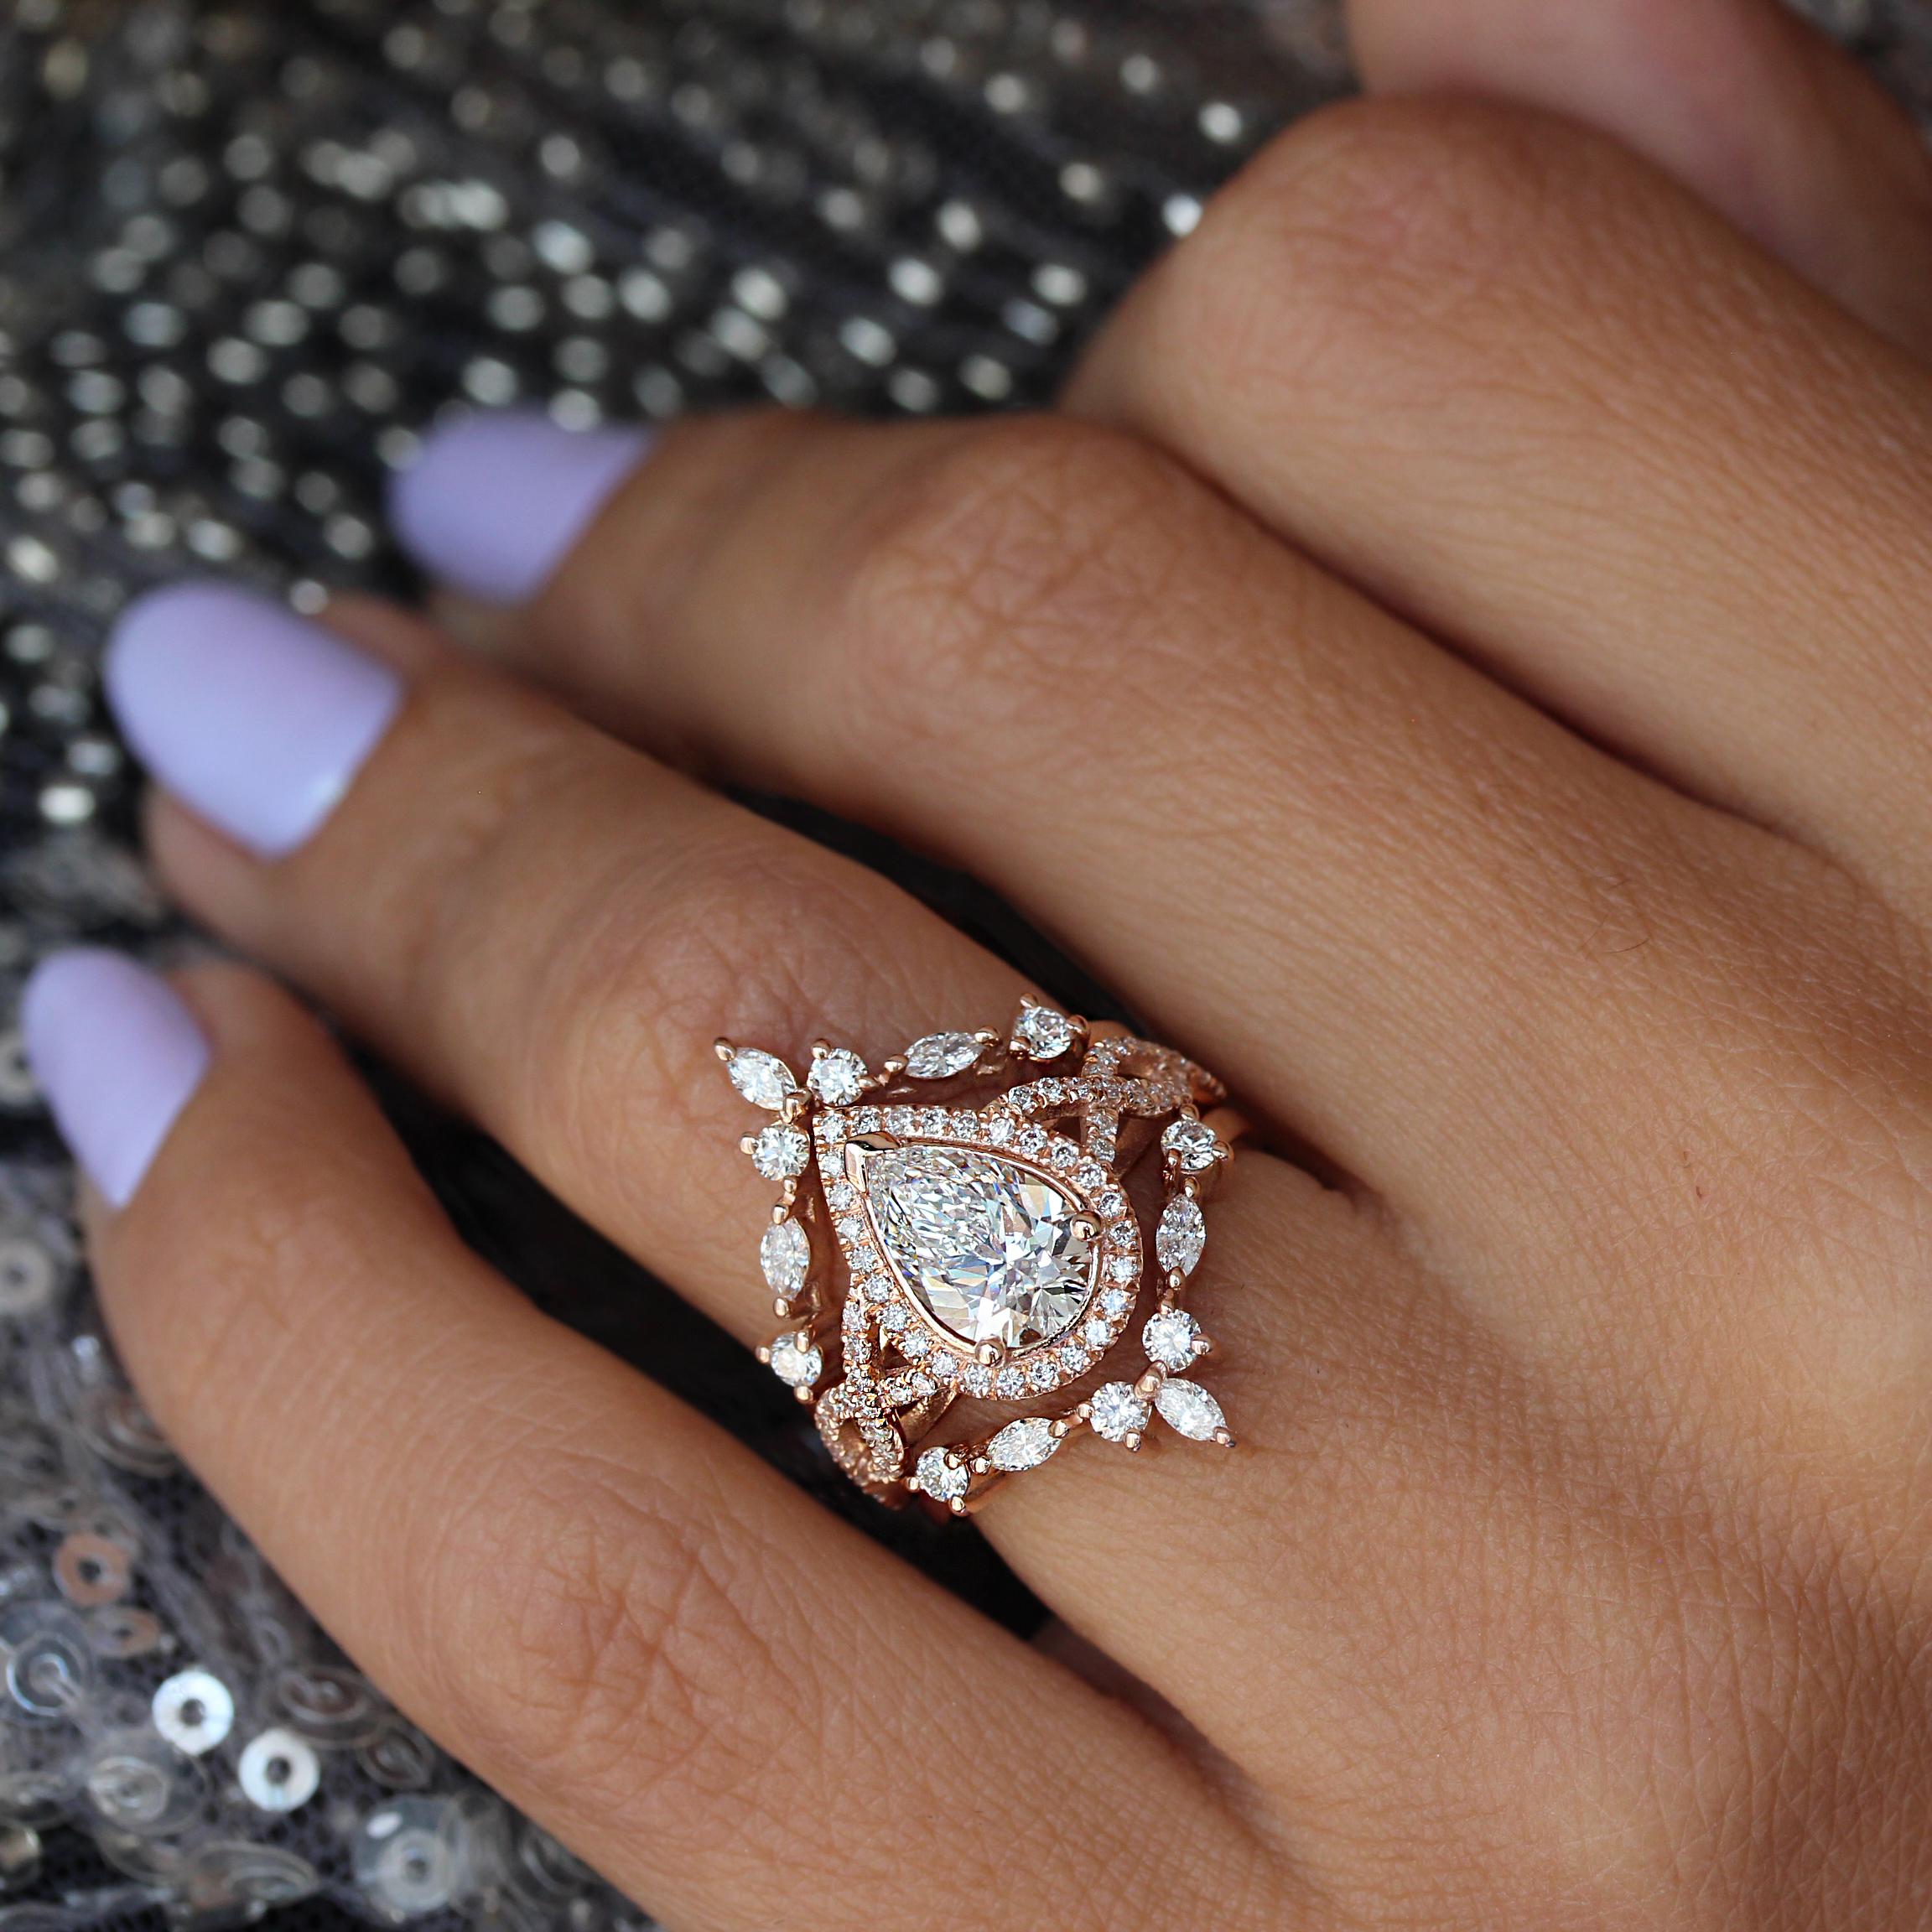 1.5 carat diamond ring pear shape